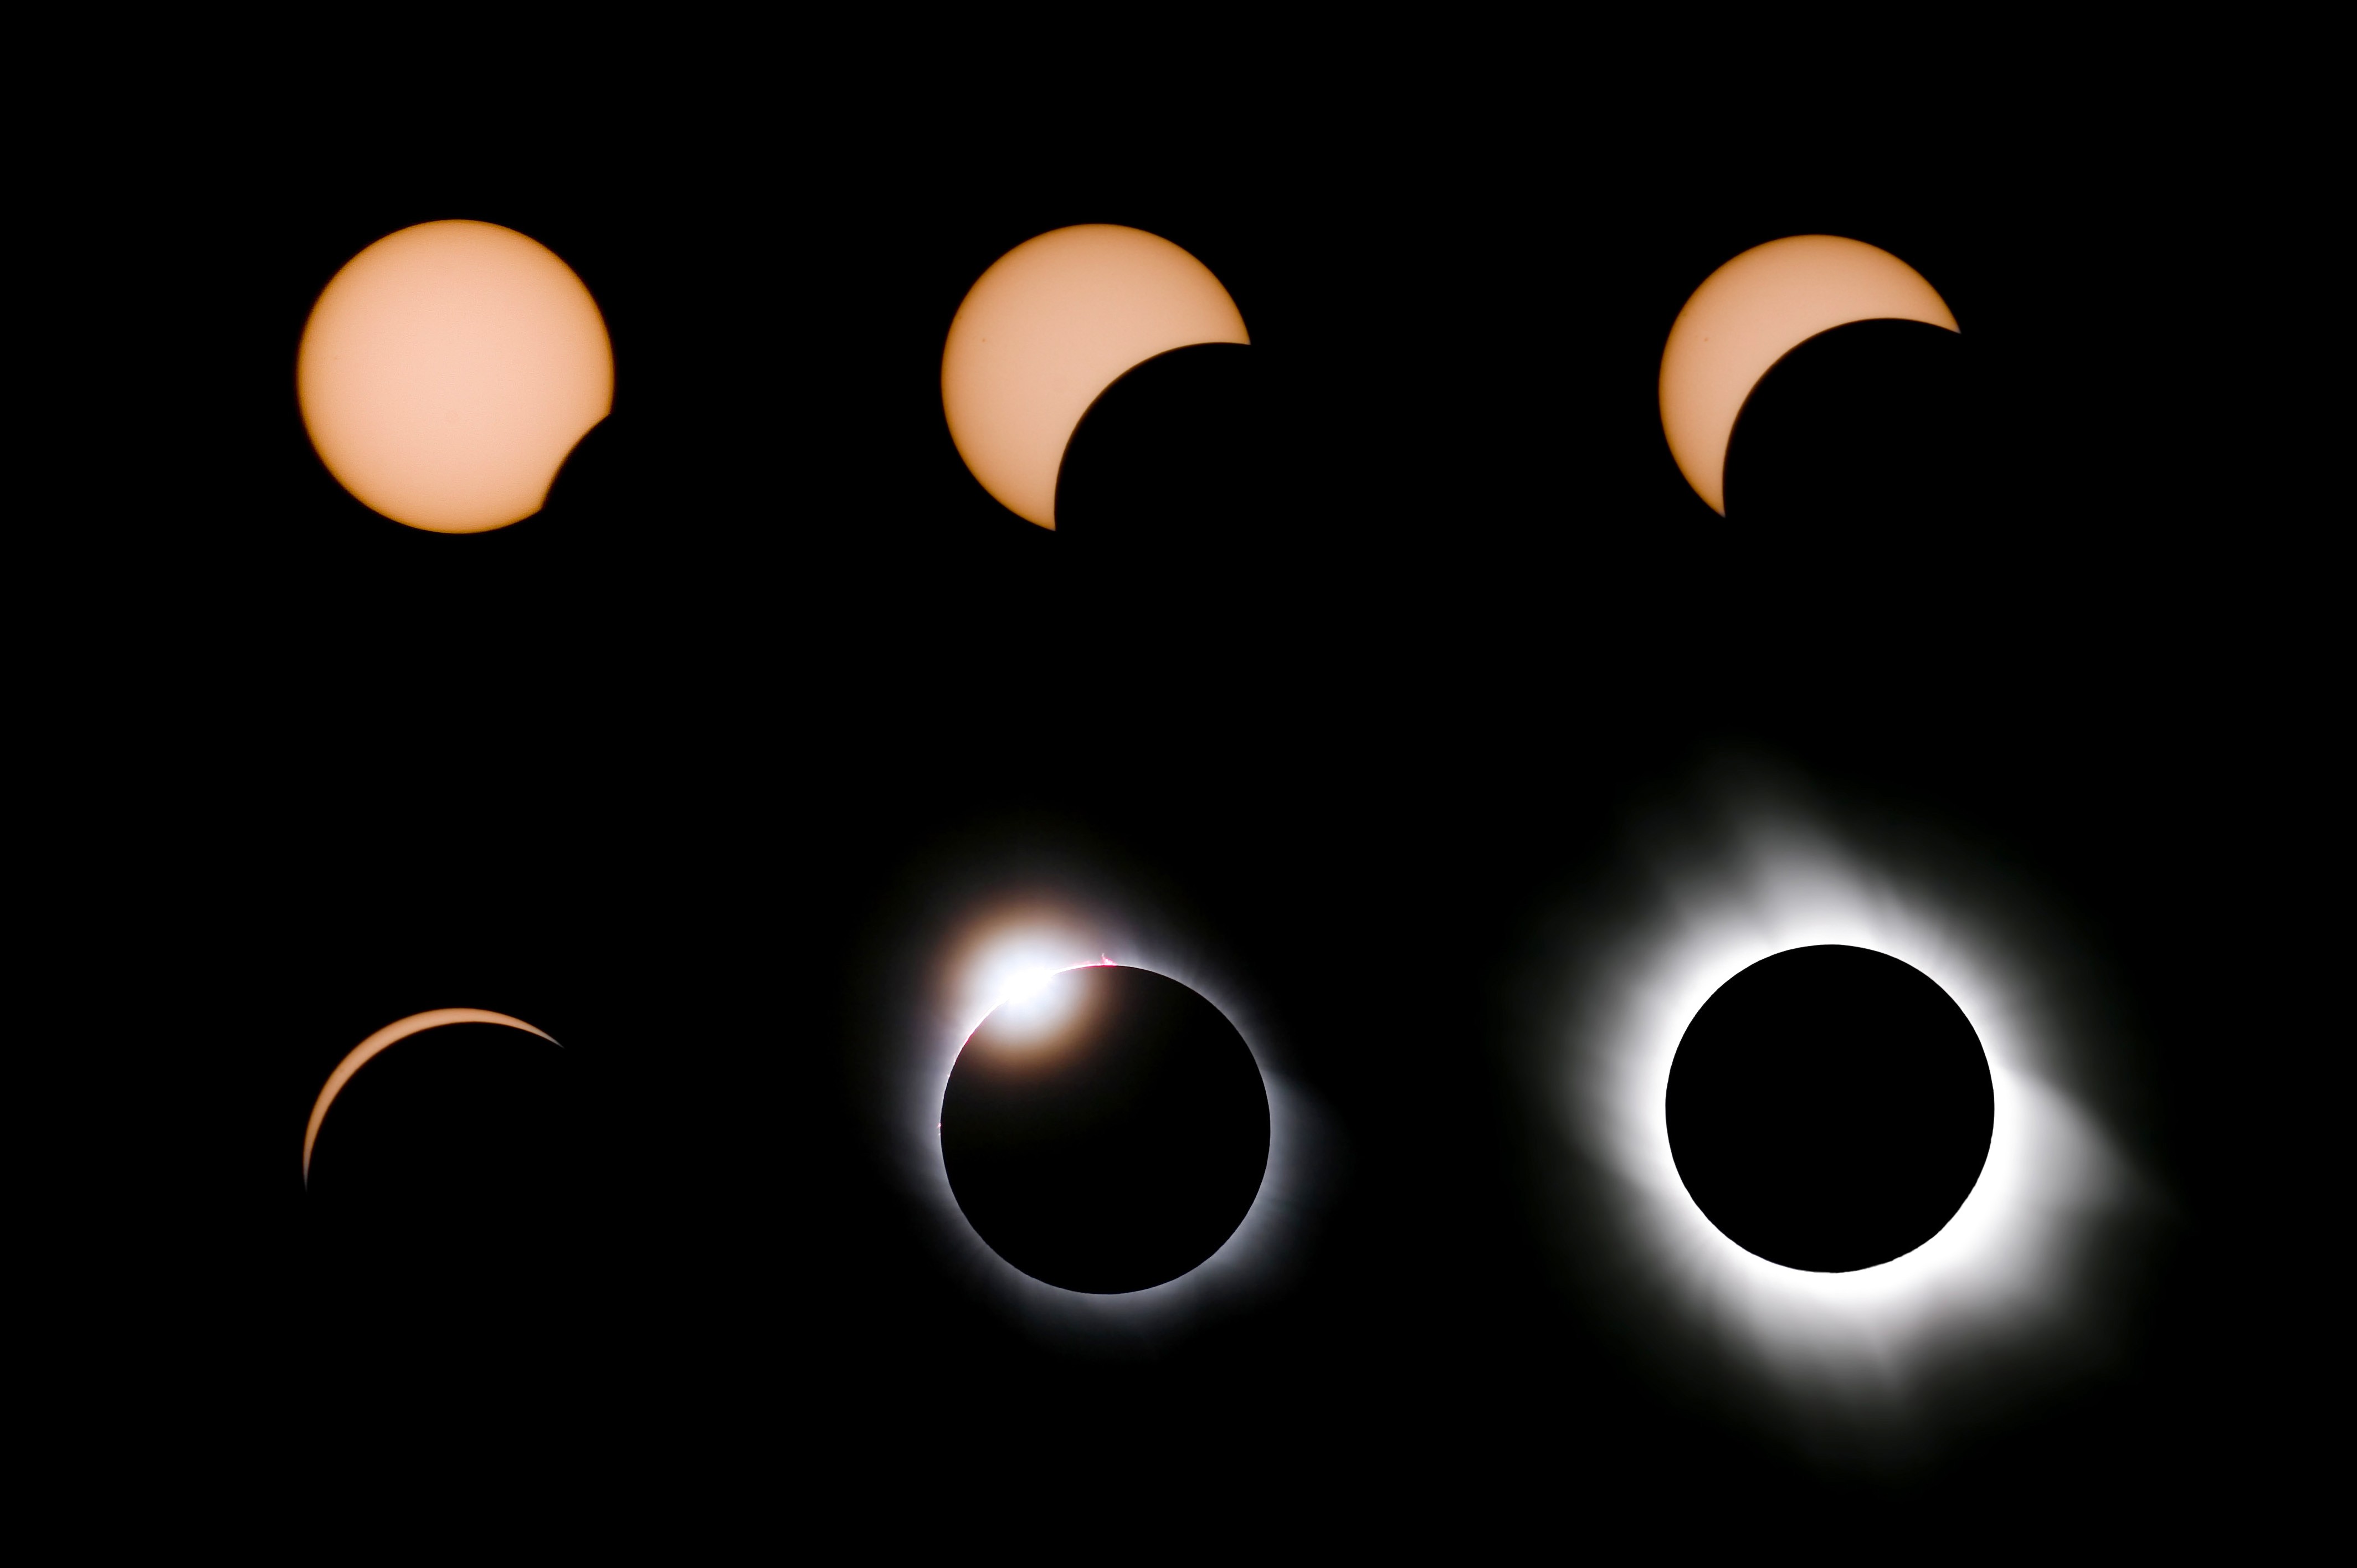 Aquí se explica cómo detectar gafas de eclipse solar falsas 